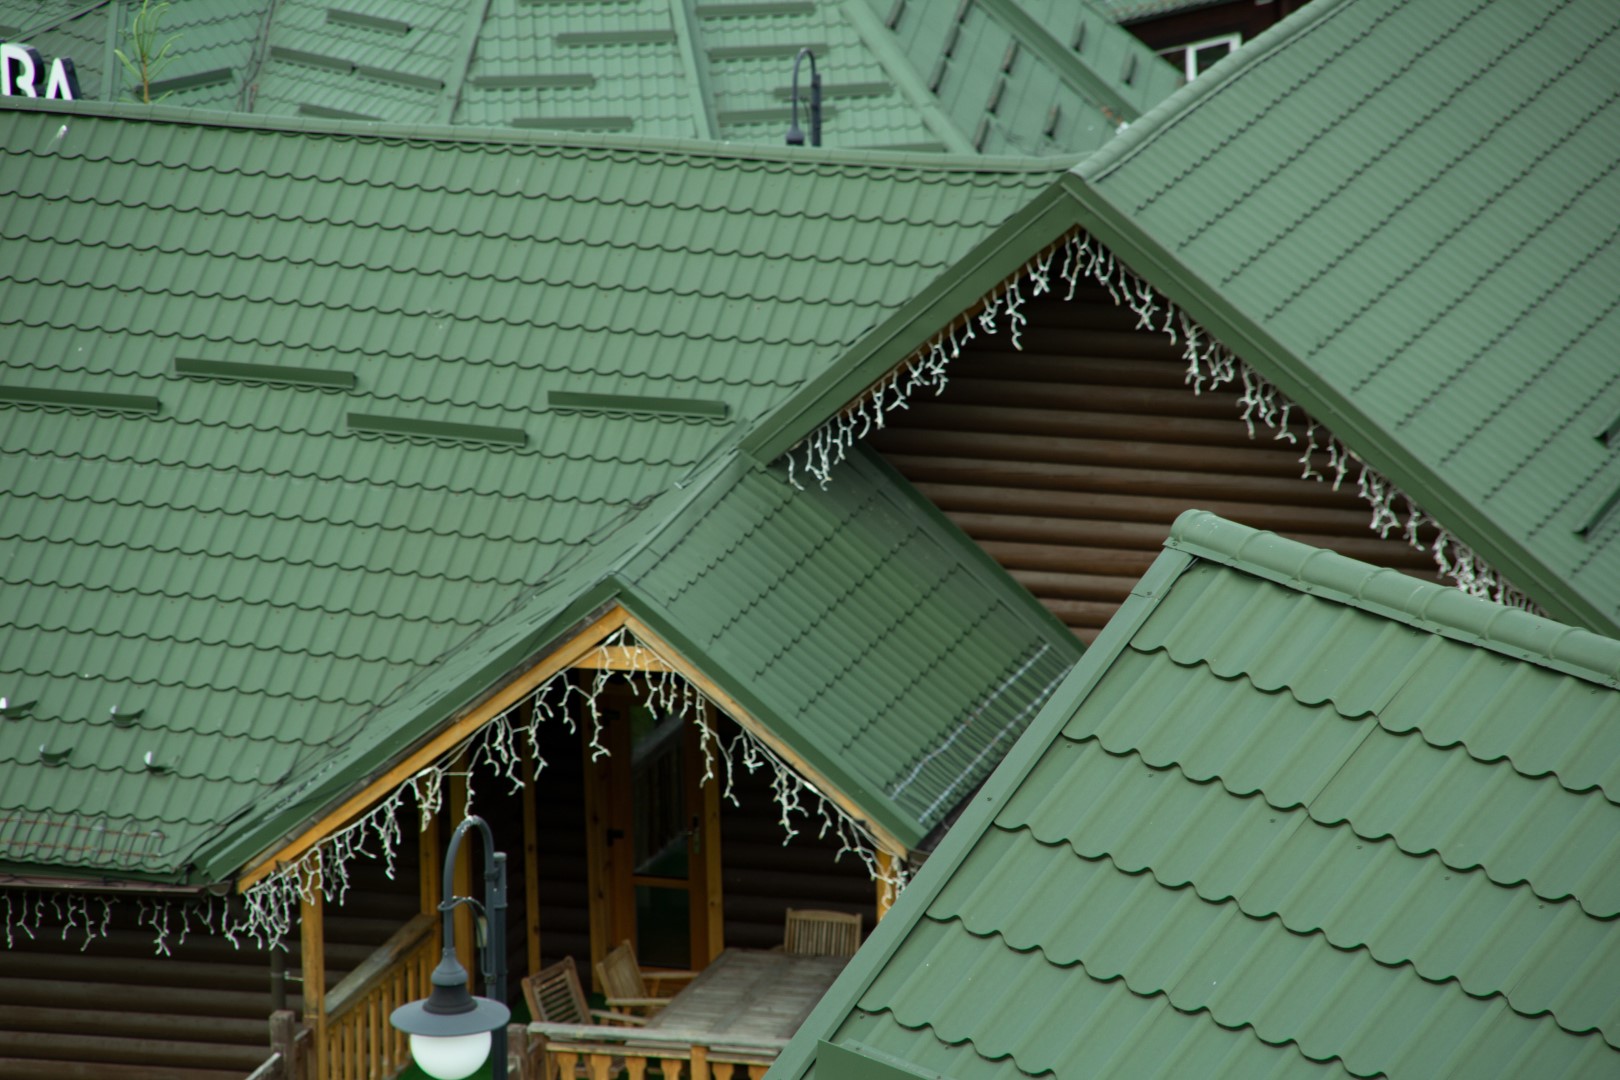 Green Roofing With Metal Tiles 2023 02 28 05 58 12 Utc